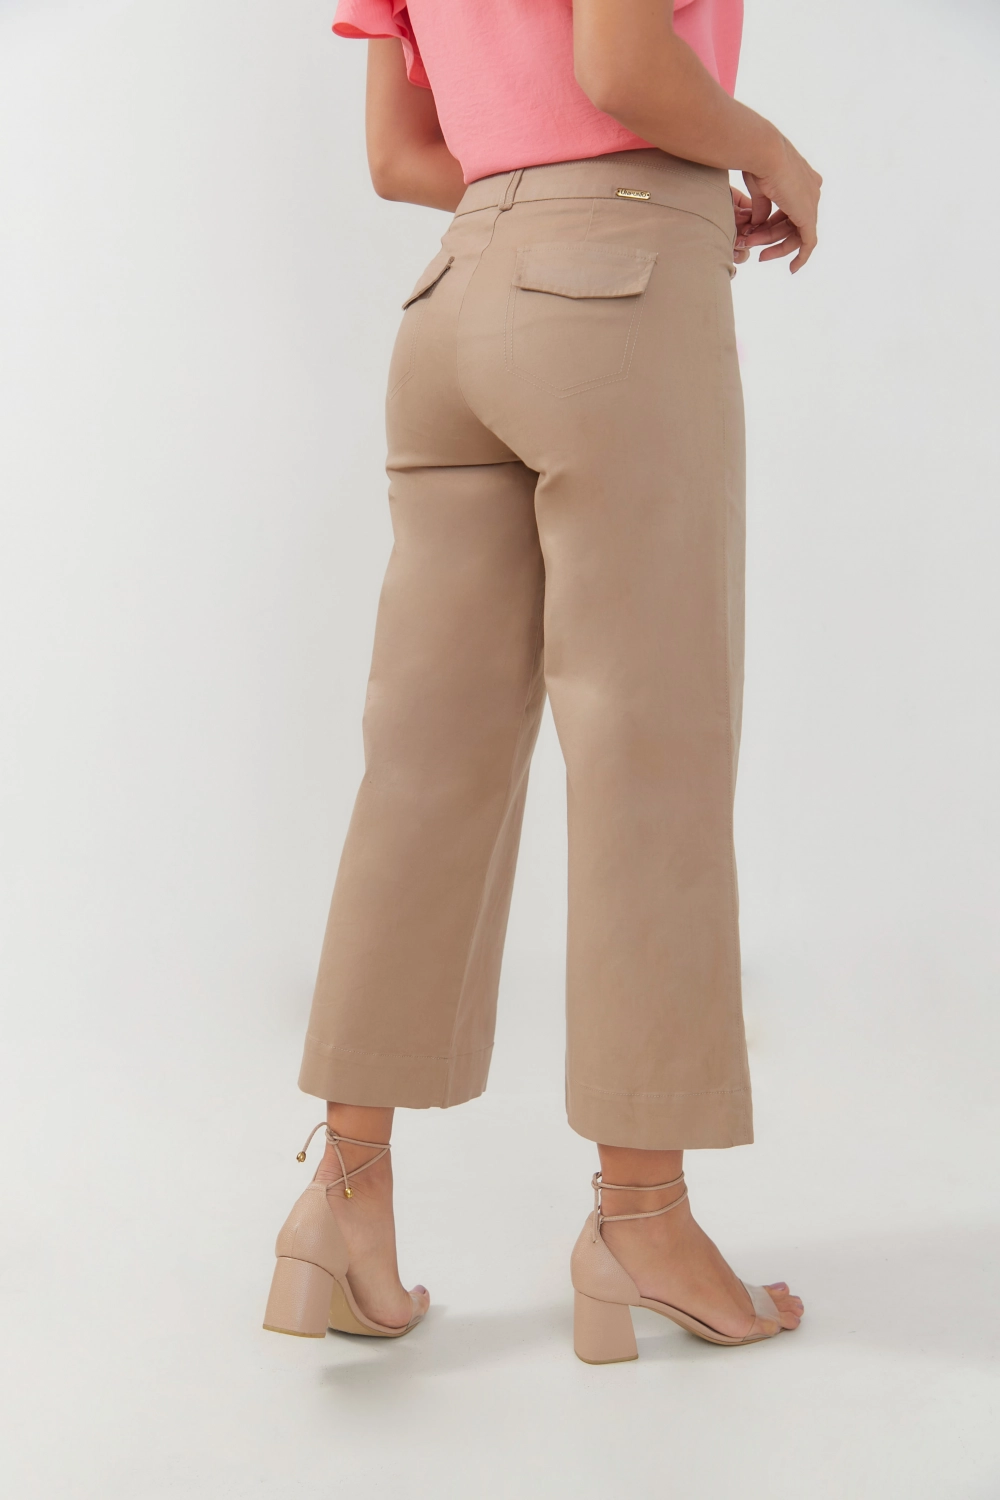 Pantalón cropped en dril pretina ancha. Kaki talla 12